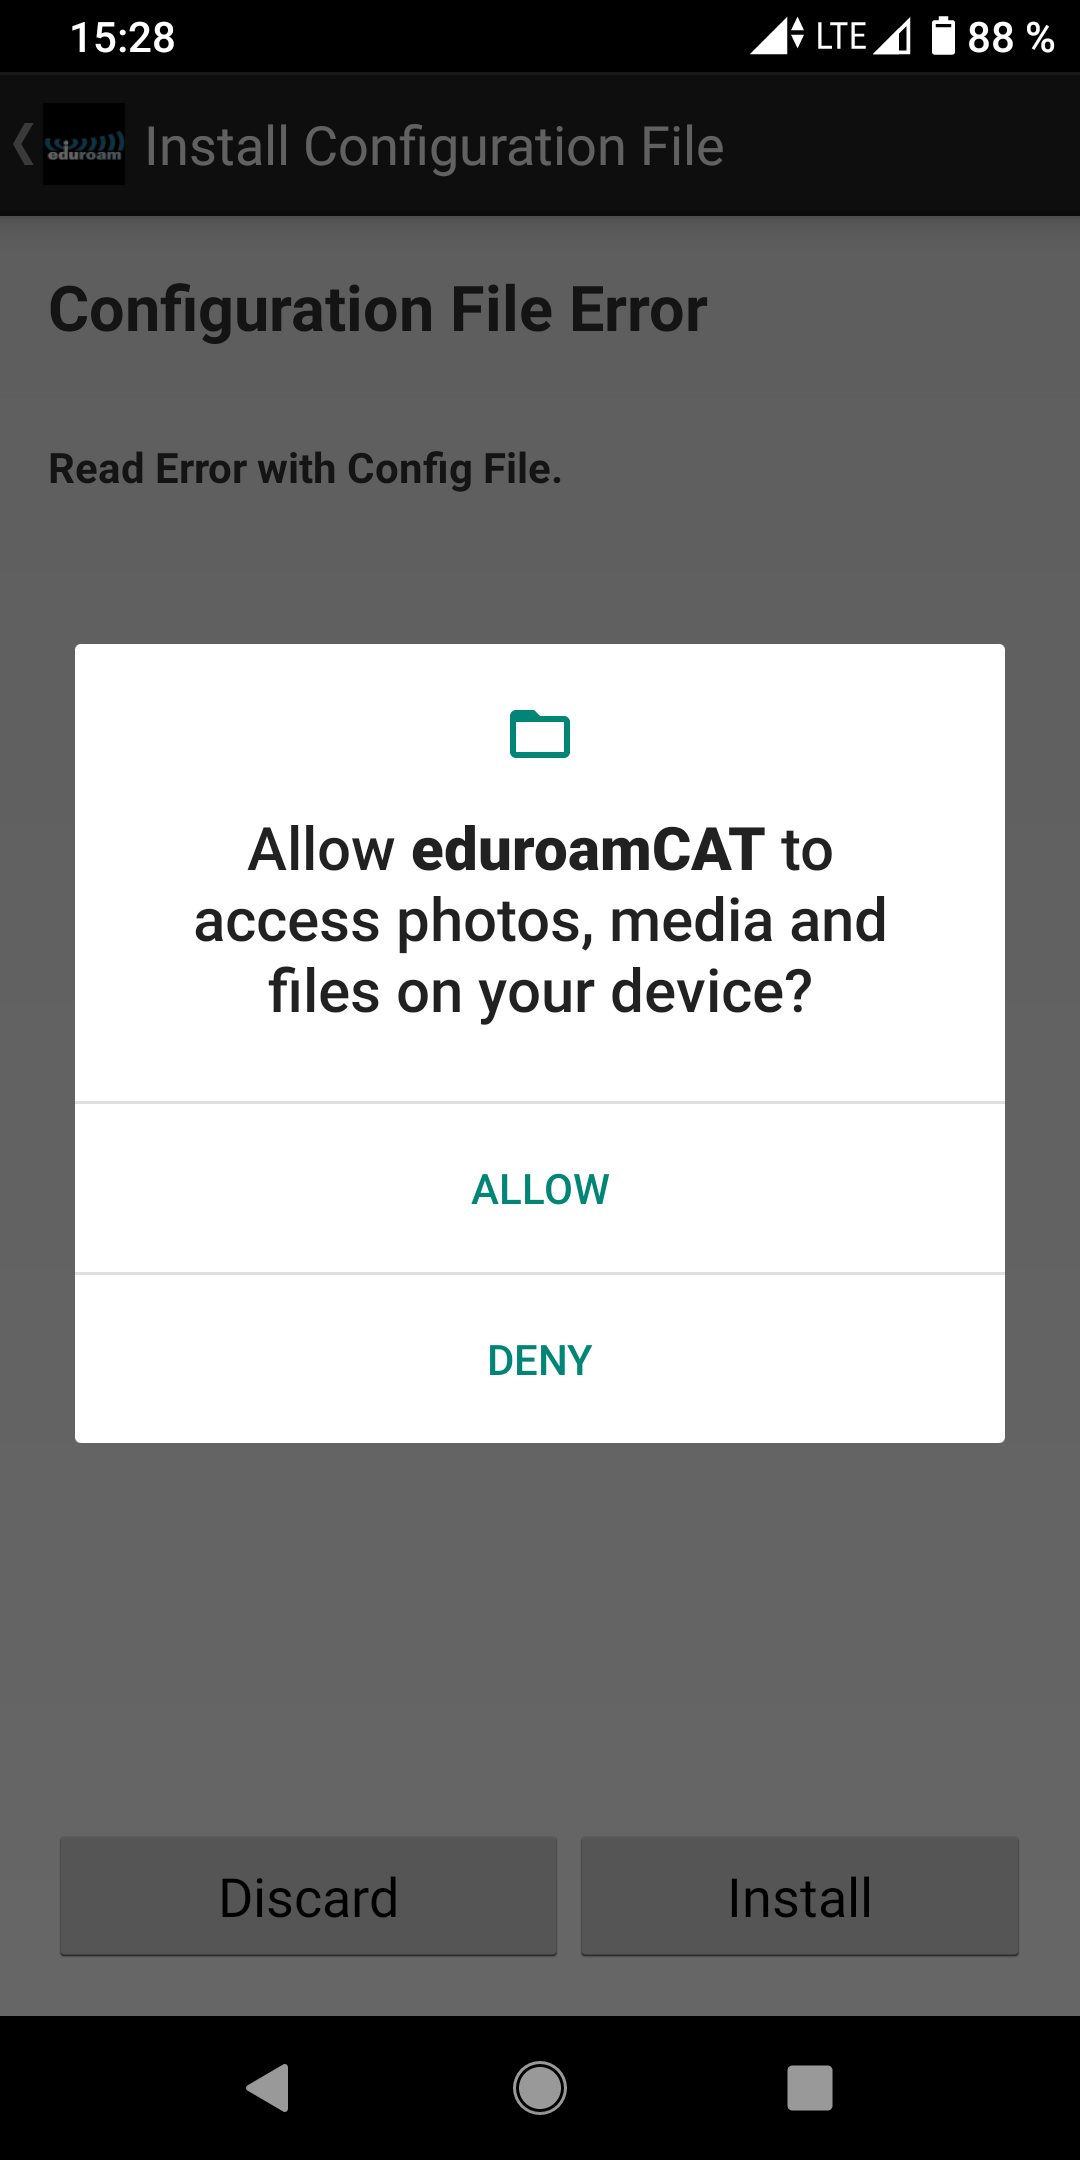 Screenshot Android eduroam CAT App - allow access to files